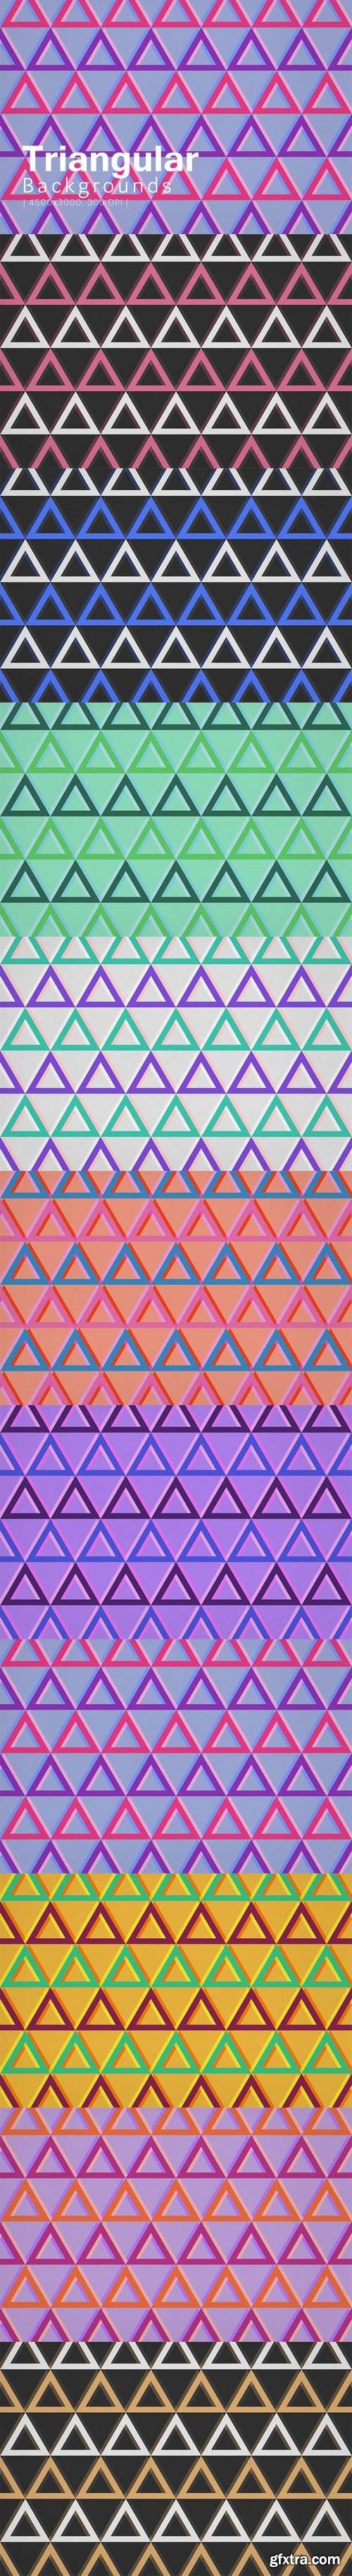 Triangular Backgrounds